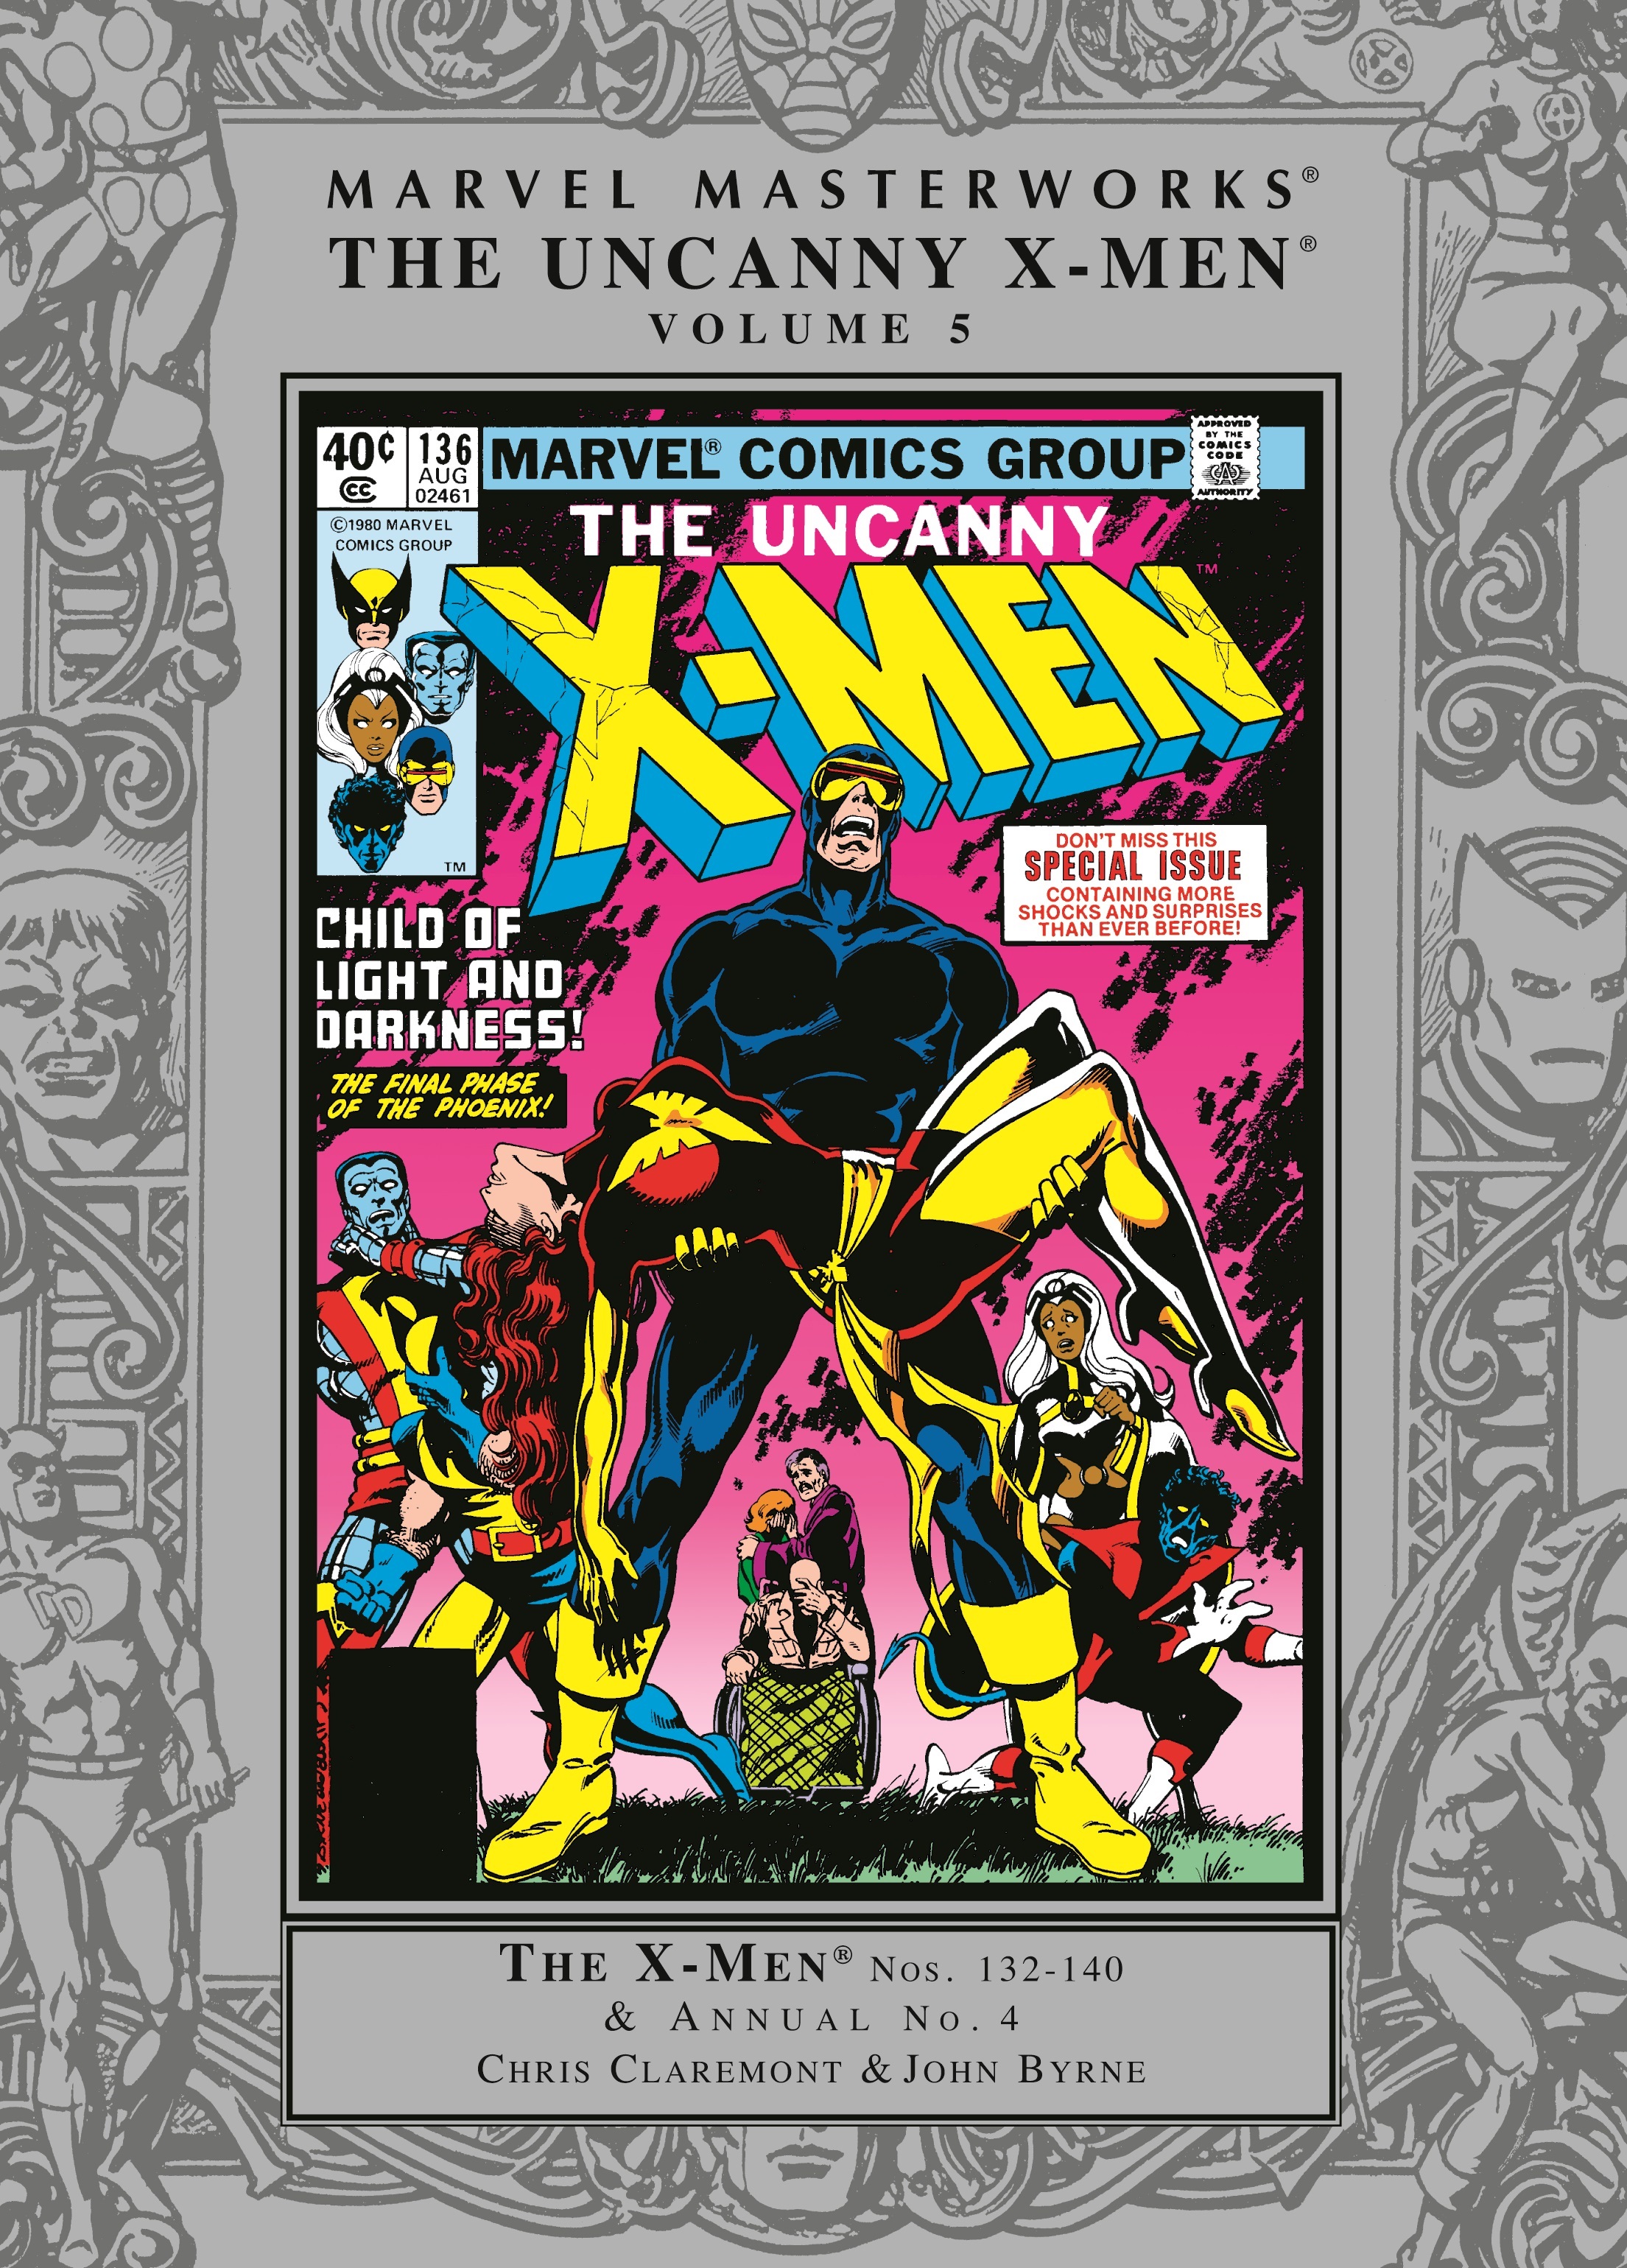 MARVEL MASTERWORKS: THE UNCANNY X-MEN VOL. 2 HC (Hardcover)